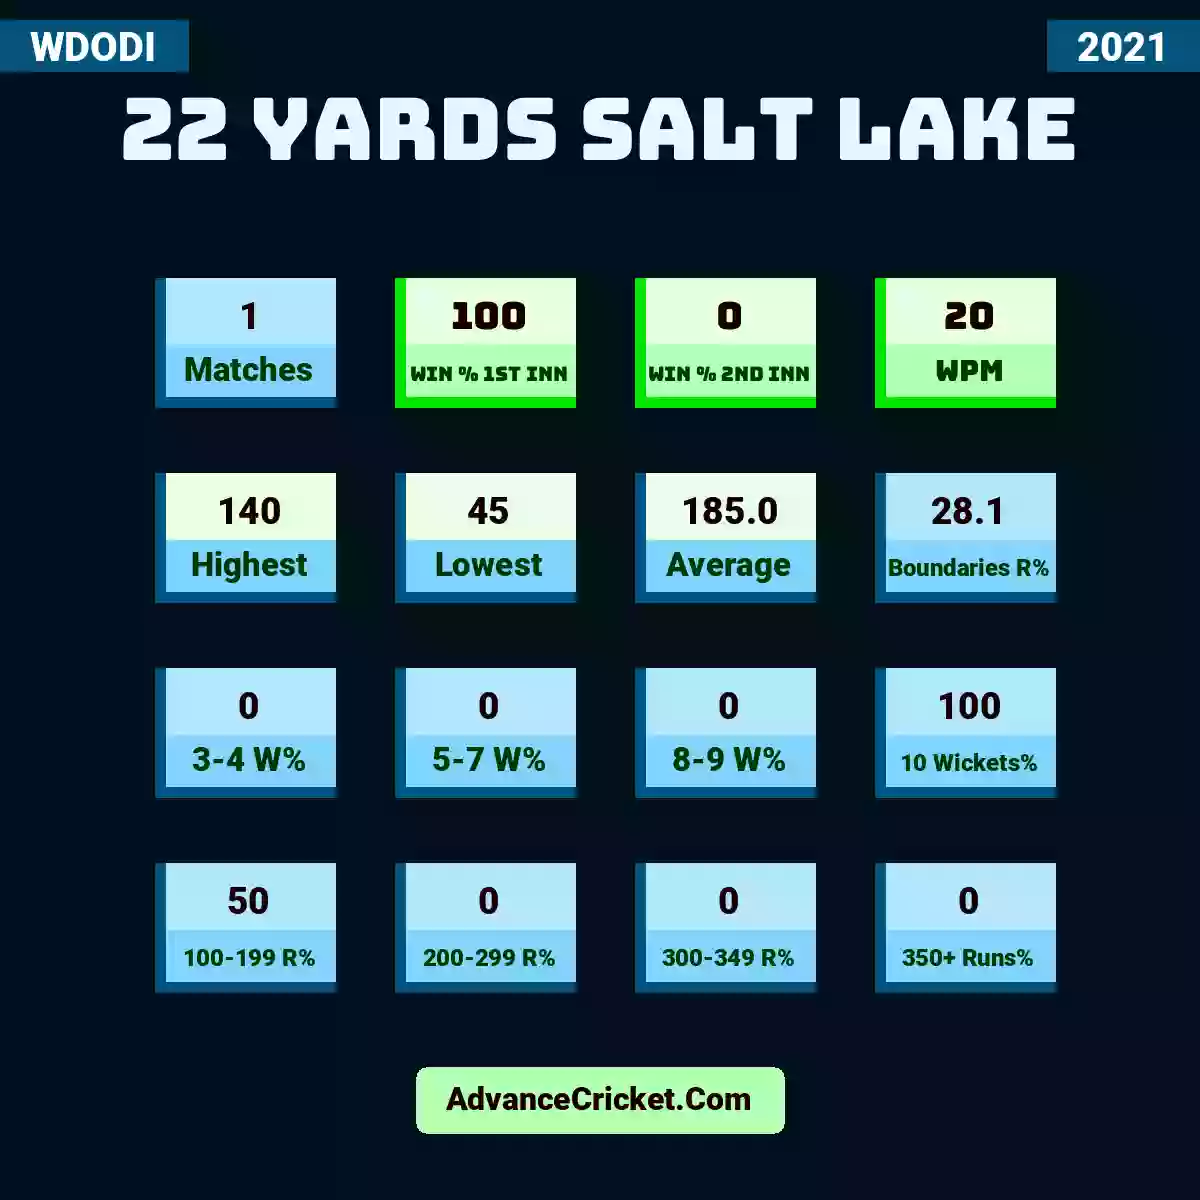 Image showing 22 Yards Salt Lake with Matches: 1, Win % 1st Inn: 100, Win % 2nd Inn: 0, WPM: 20, Highest: 140, Lowest: 45, Average: 185.0, Boundaries R%: 28.1, 3-4 W%: 0, 5-7 W%: 0, 8-9 W%: 0, 10 Wickets%: 100, 100-199 R%: 50, 200-299 R%: 0, 300-349 R%: 0, 350+ Runs%: 0.